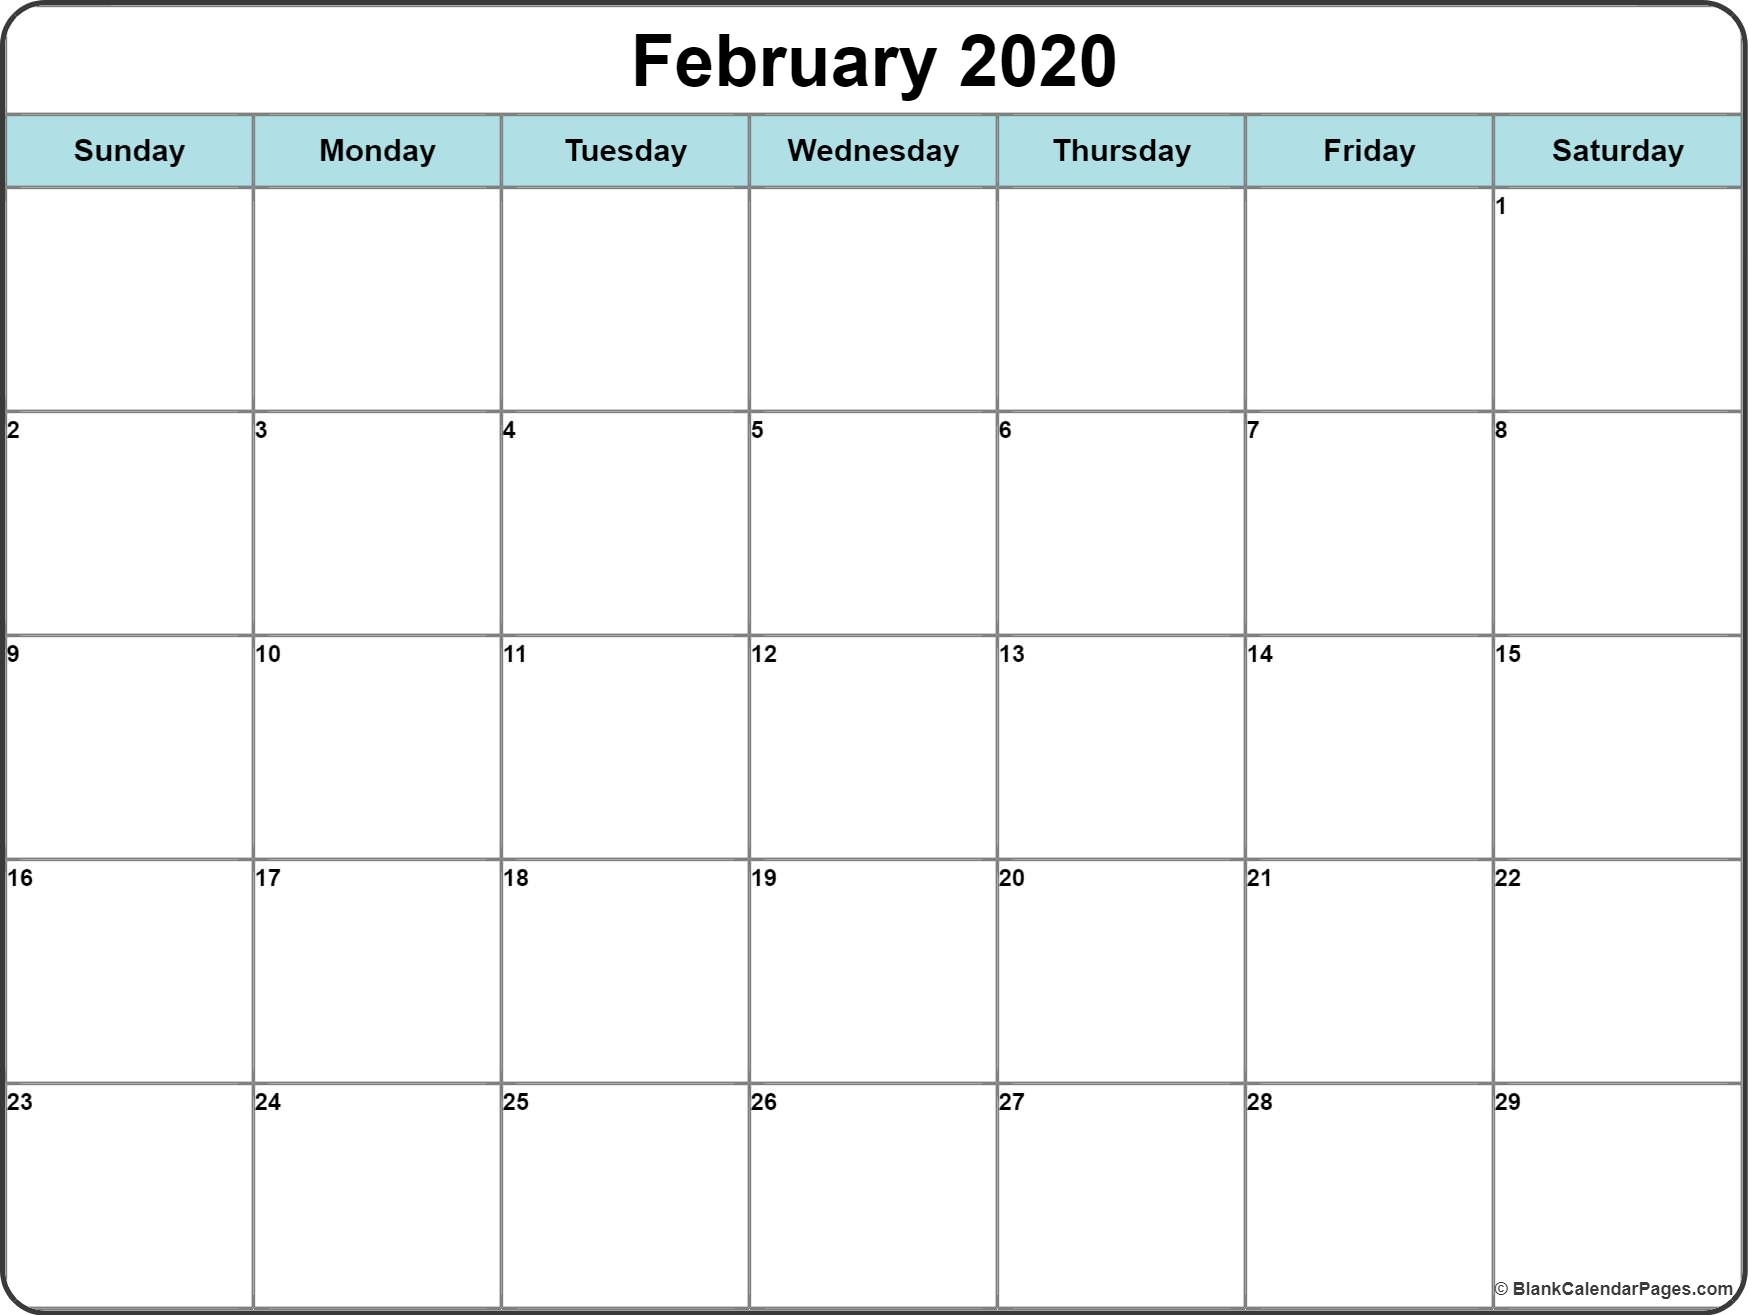 February 2020 Calendar | Free Printable Monthly Calendars throughout Maroon 5 Calendar 2020